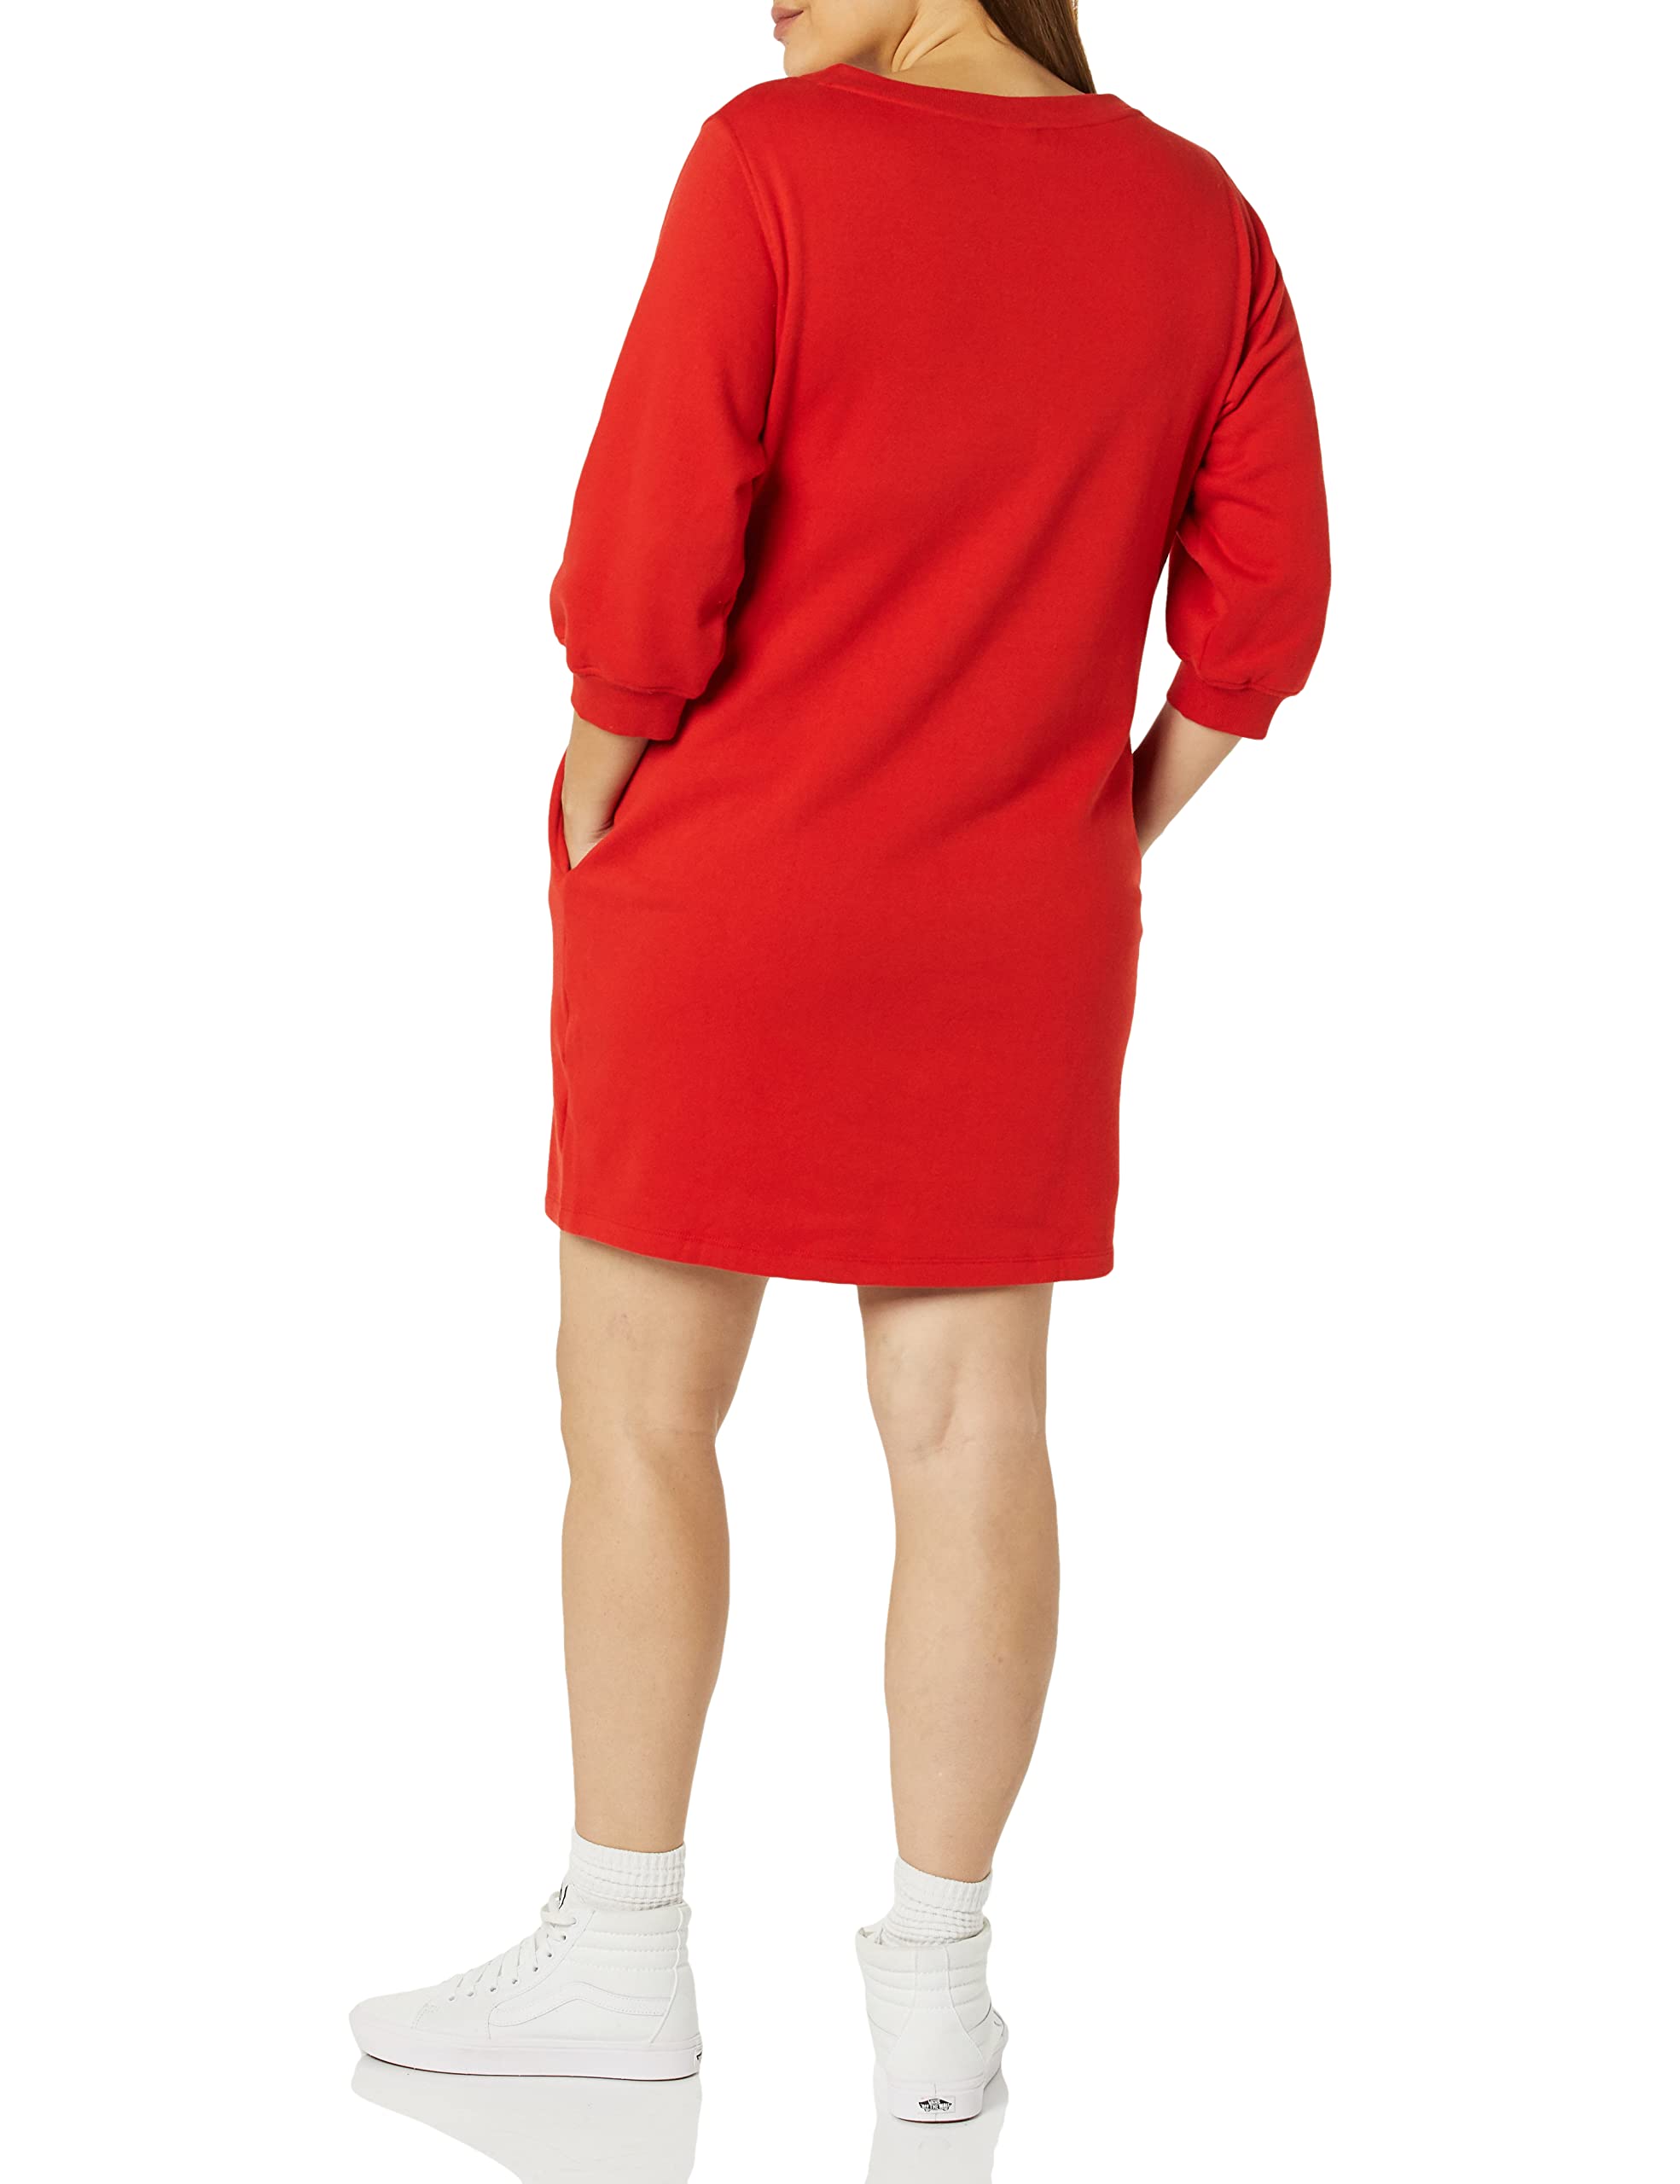 Amazon Essentials Women's French Terry Blouson Sleeve Crewneck Sweatshirt Dress (Available in Plus Size)